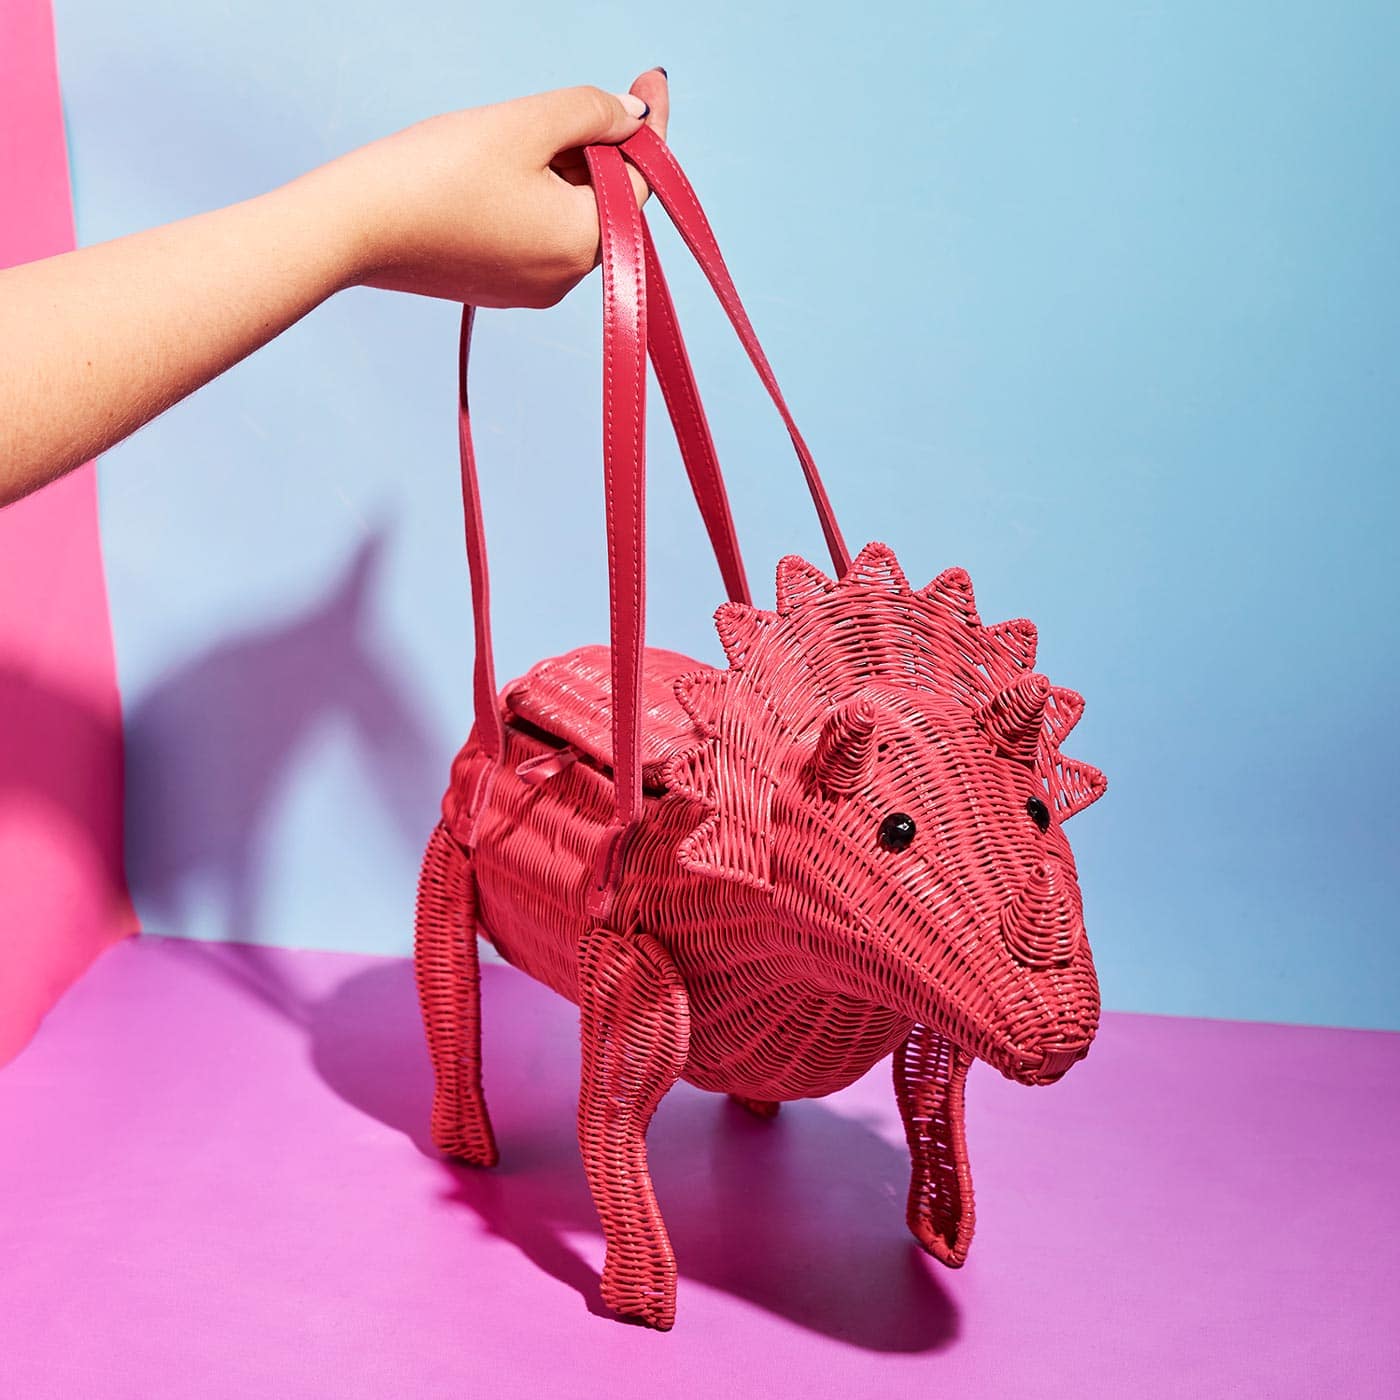 Wicker Darling's Joan the triceratops purse 